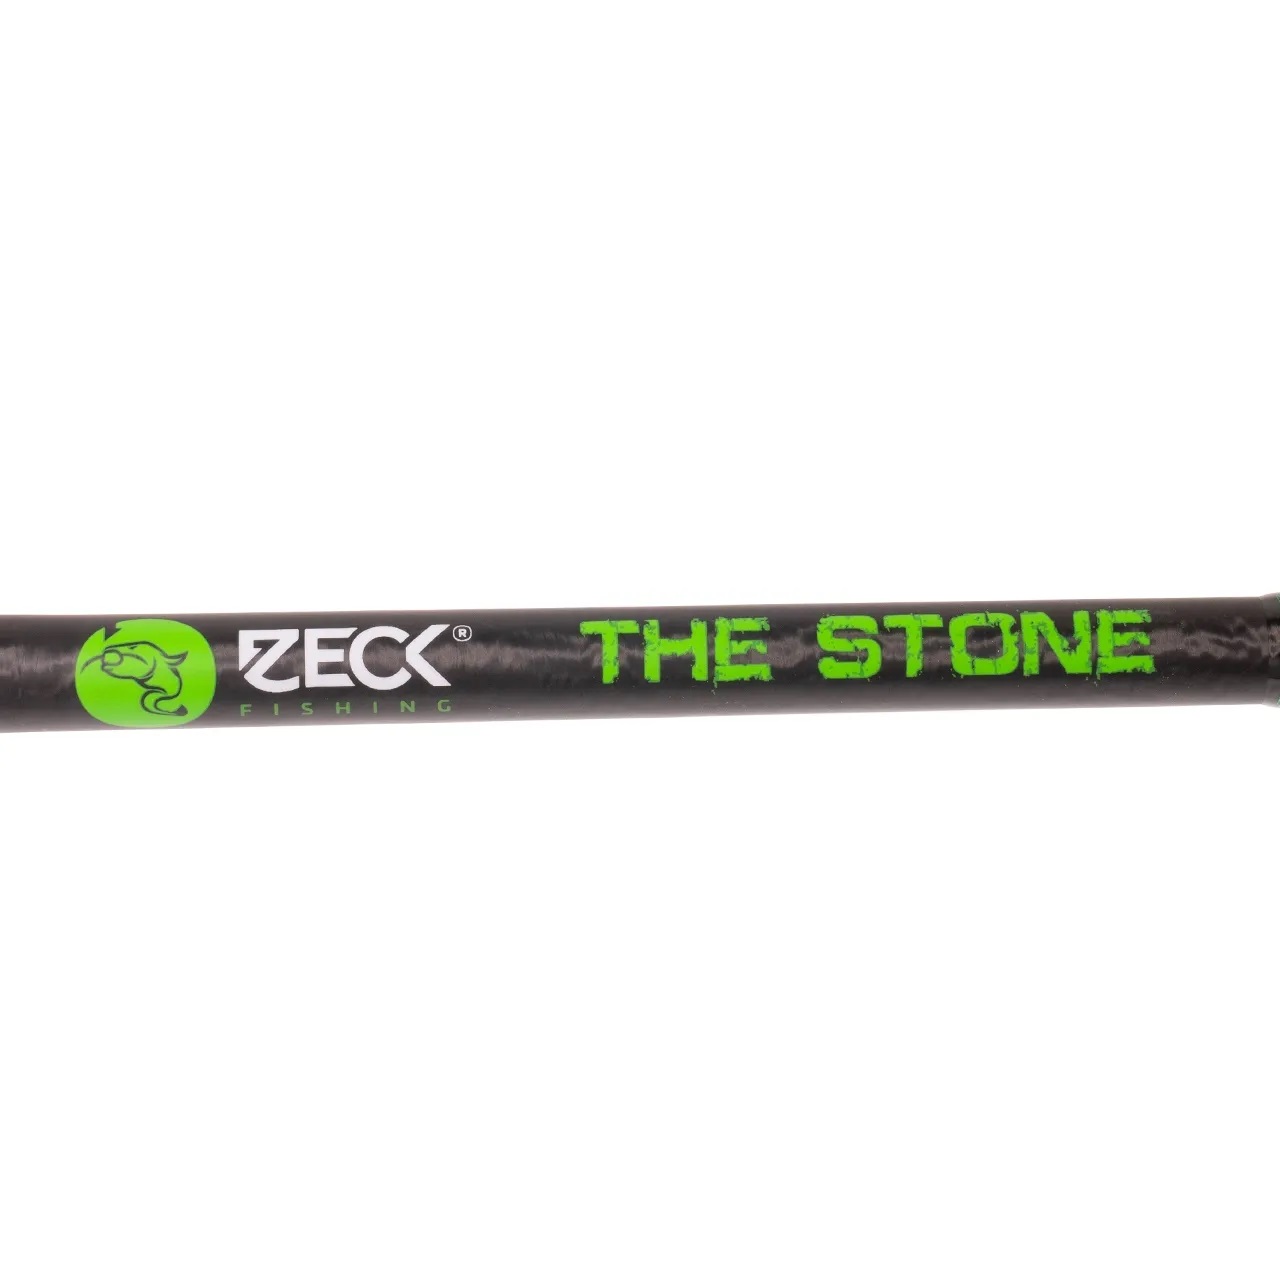 Zeck The Stone2